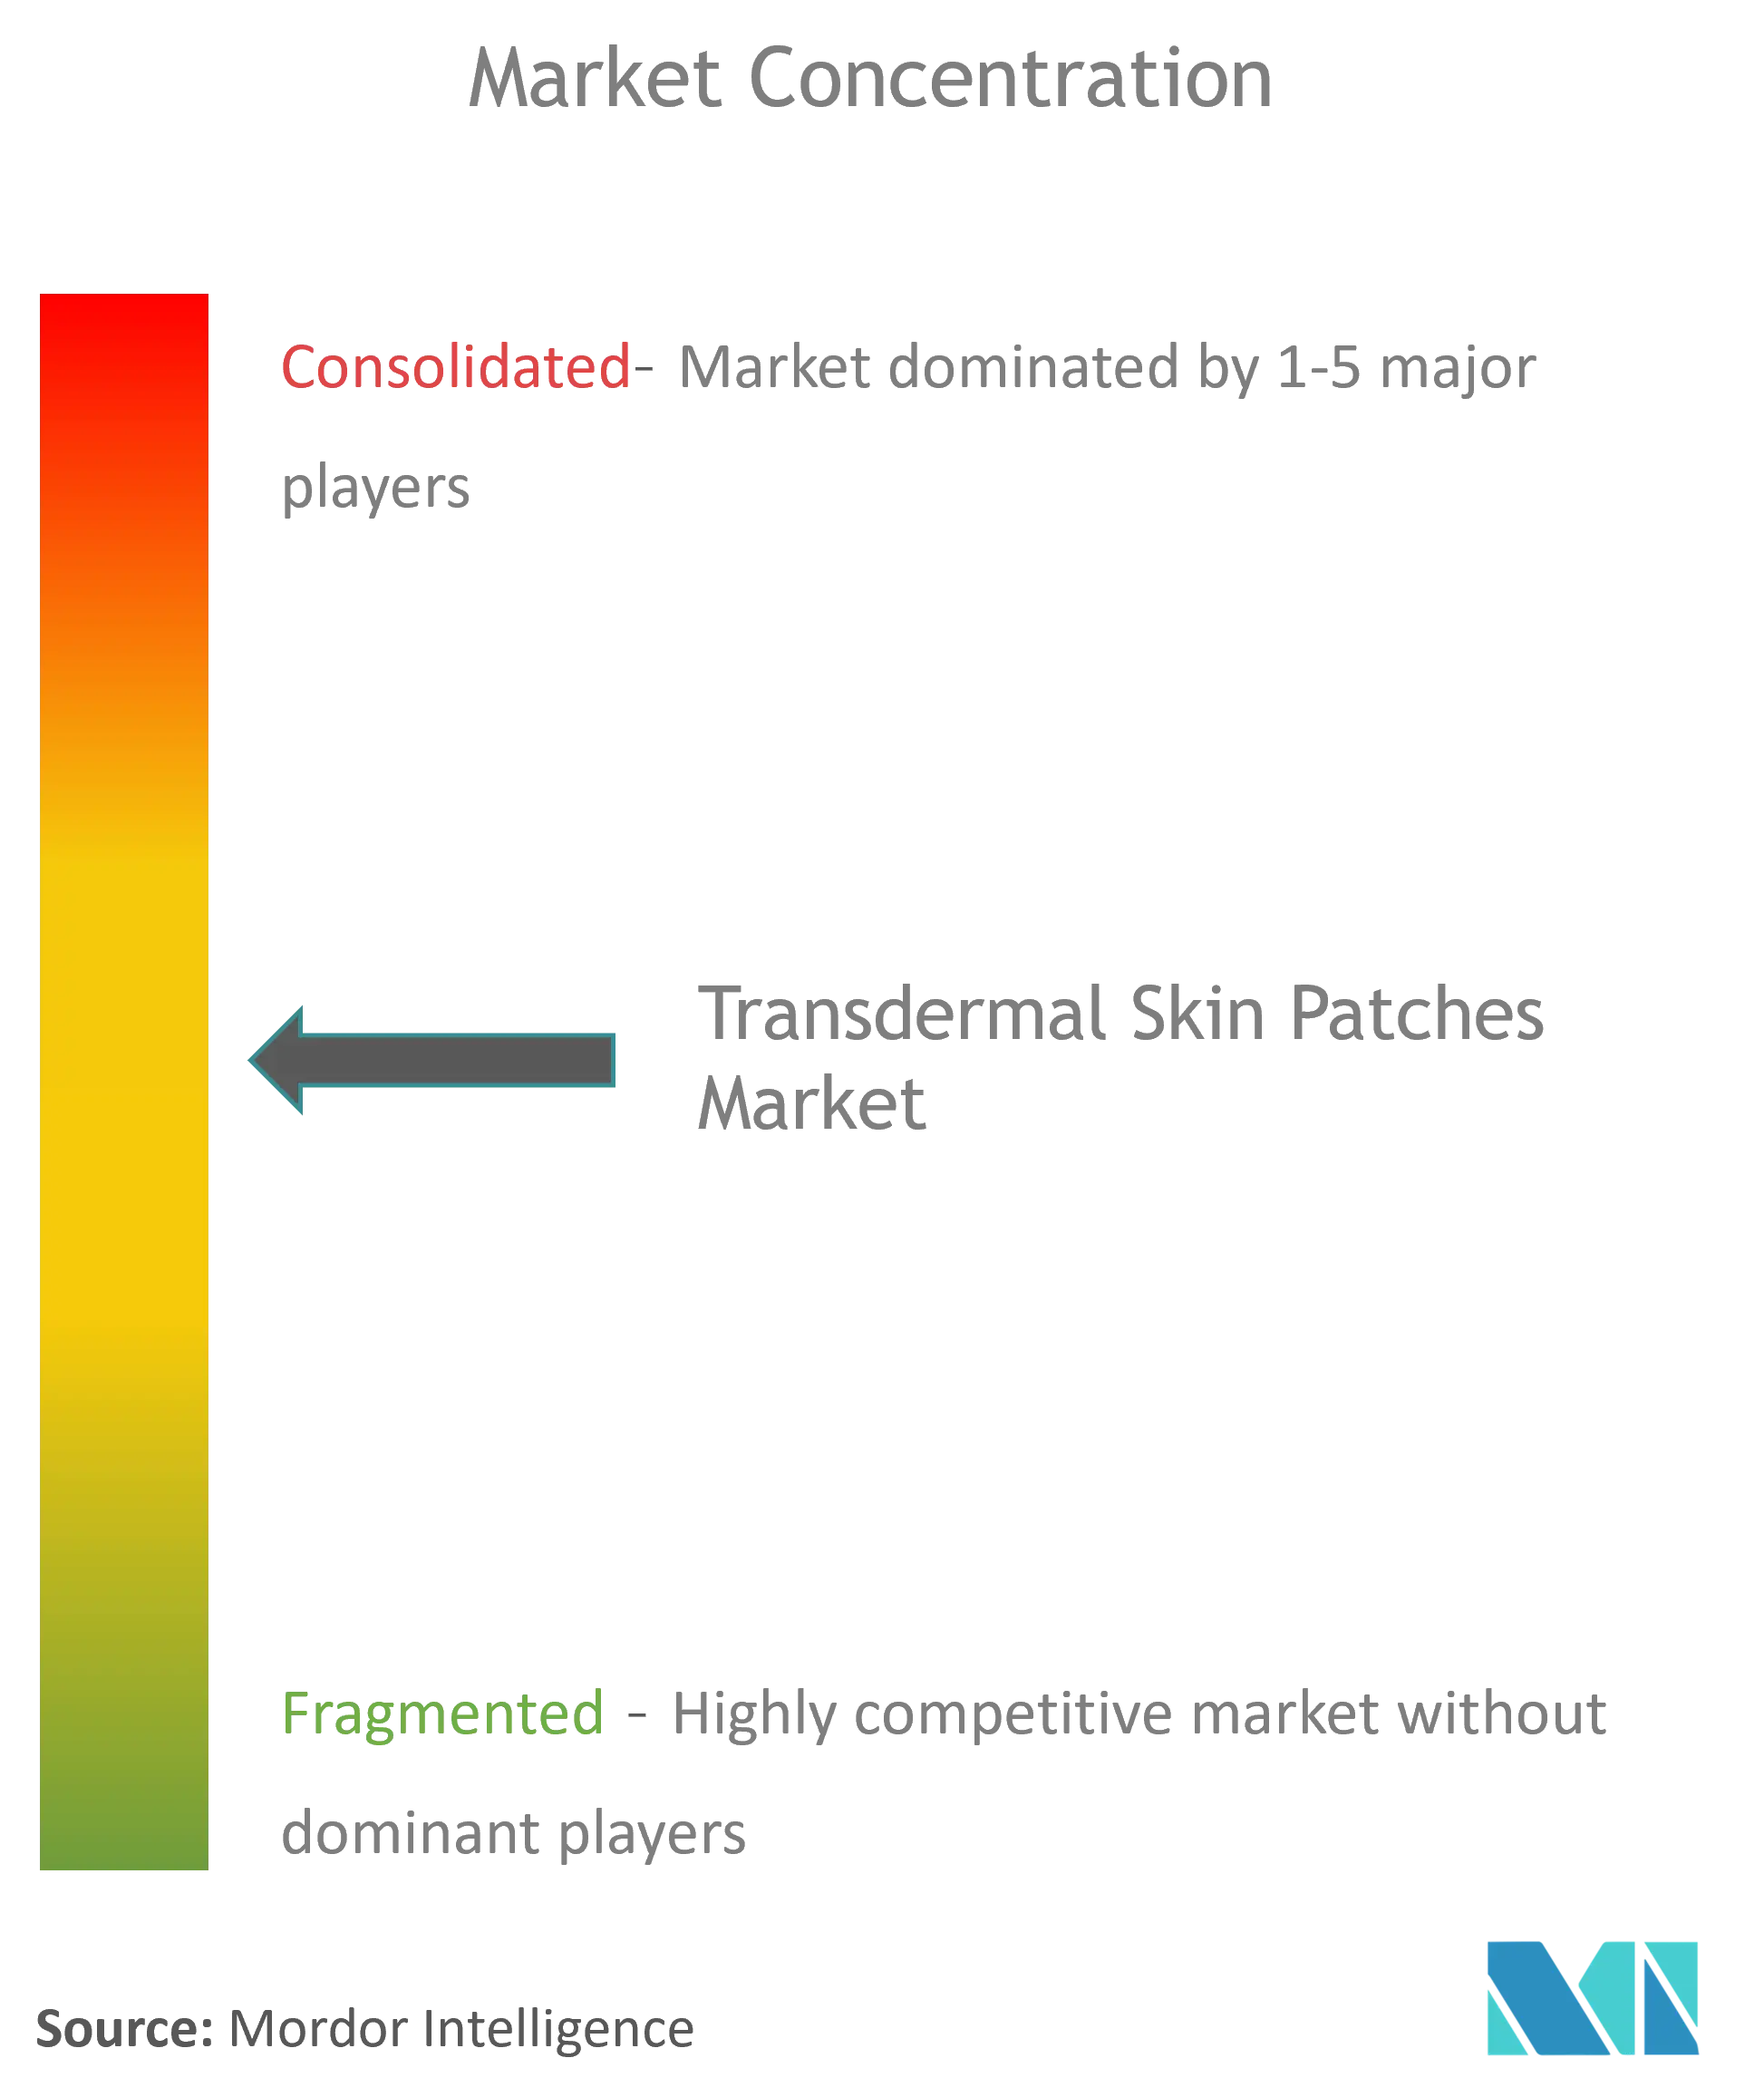 Transdermal Skin Patches Market Concentration